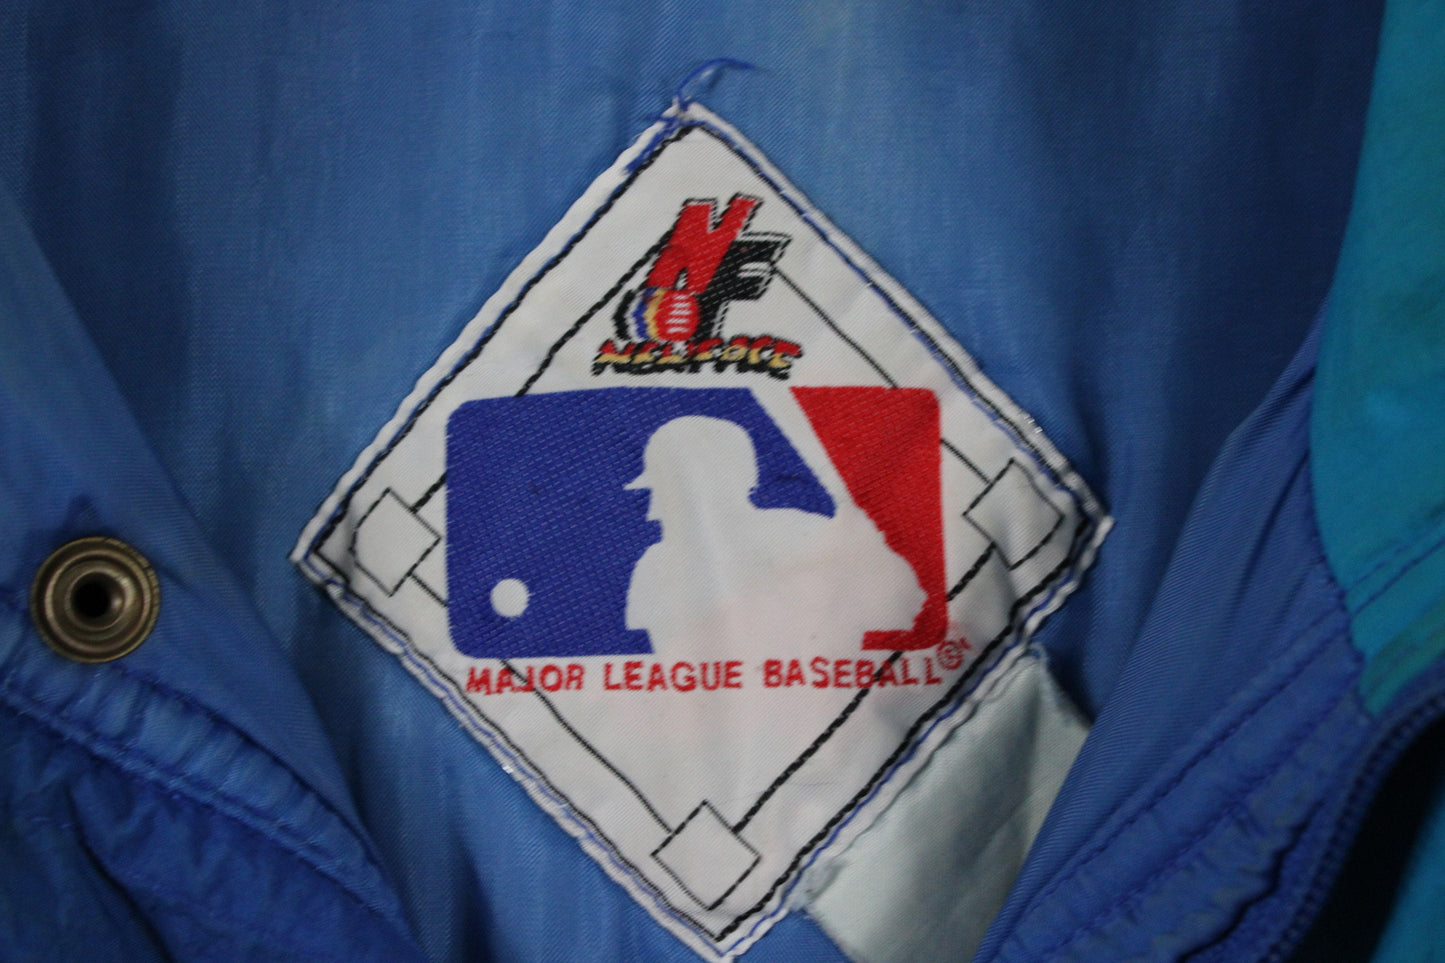 Blue-Jays Newface Jacket / Vintage MLB Baseball Letterman Varsity Coat / 90s Toronto World Series Champion / Canadian Sports Team Graphic